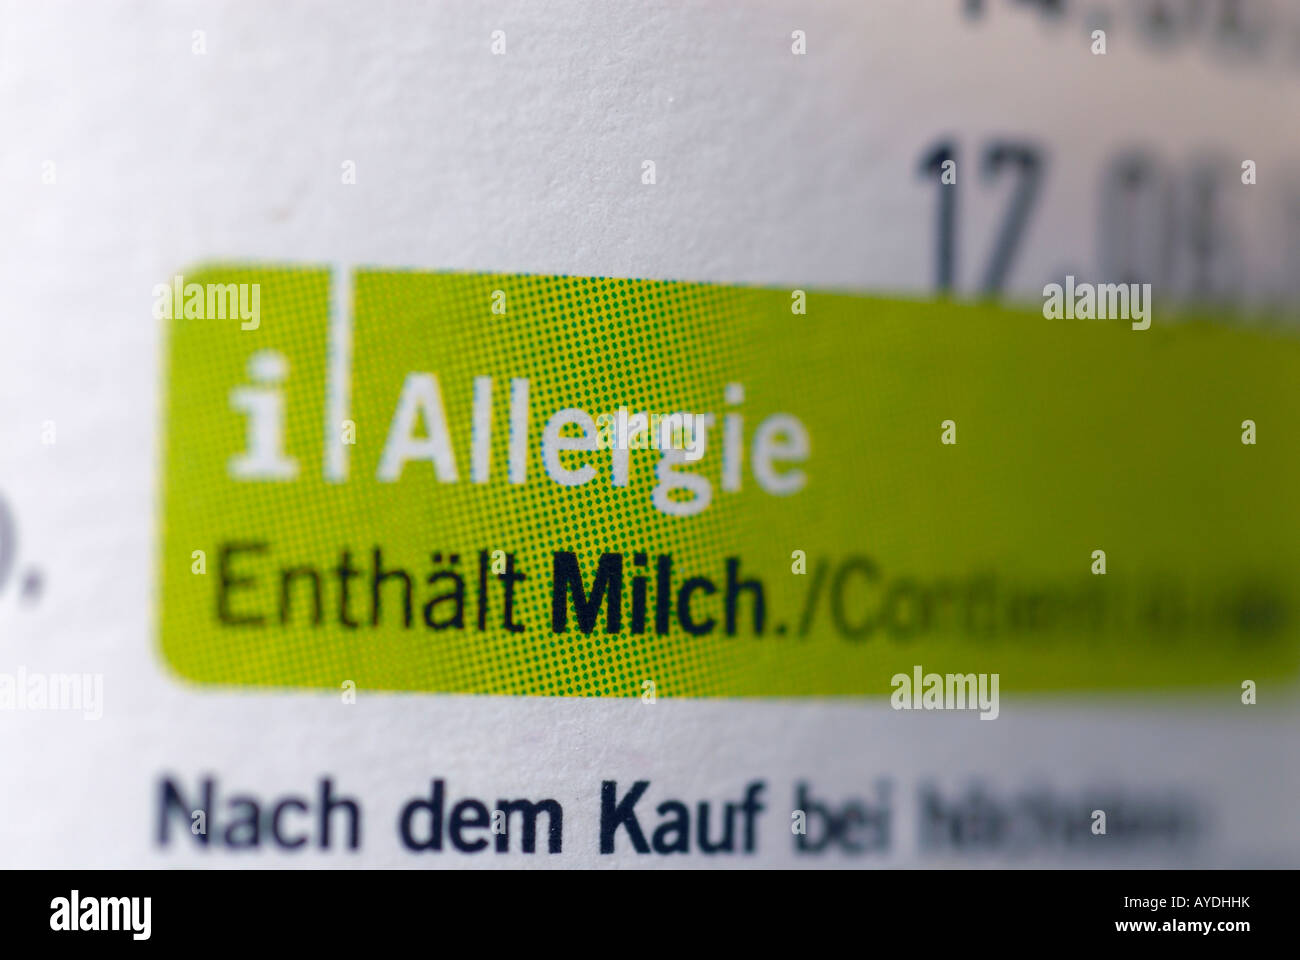 Allergy information on joghurt Stock Photo